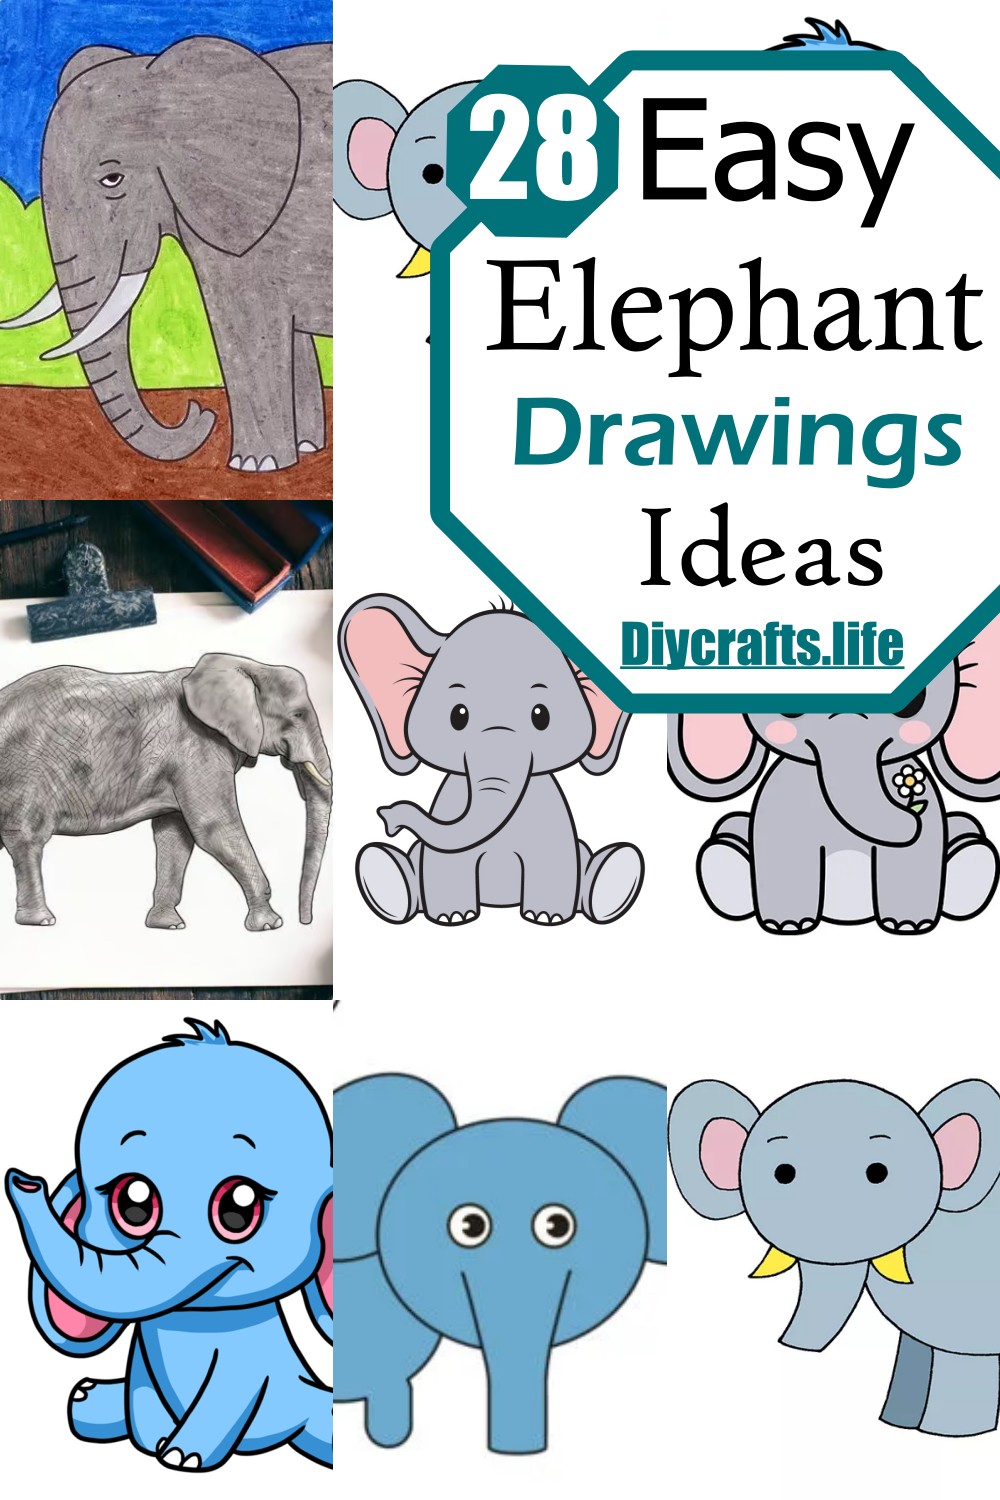 Easy Elephant Drawings Ideas